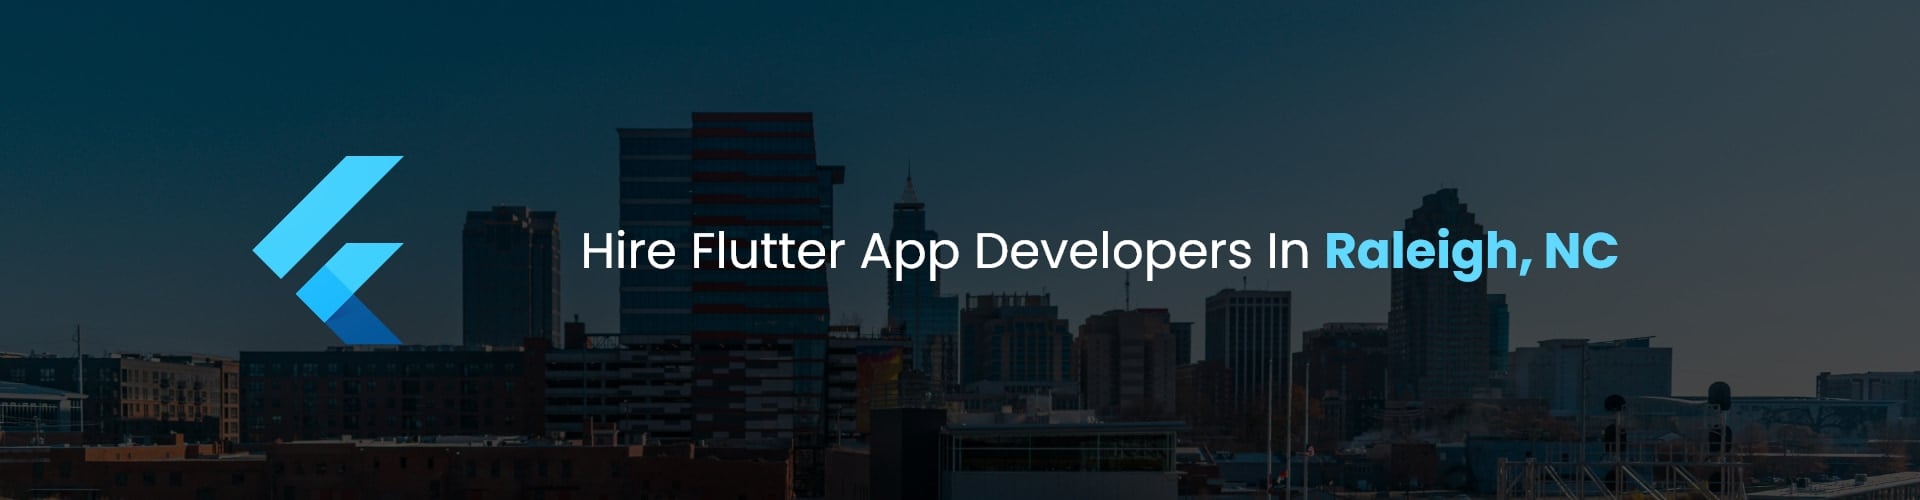 flutter app developers in raleigh